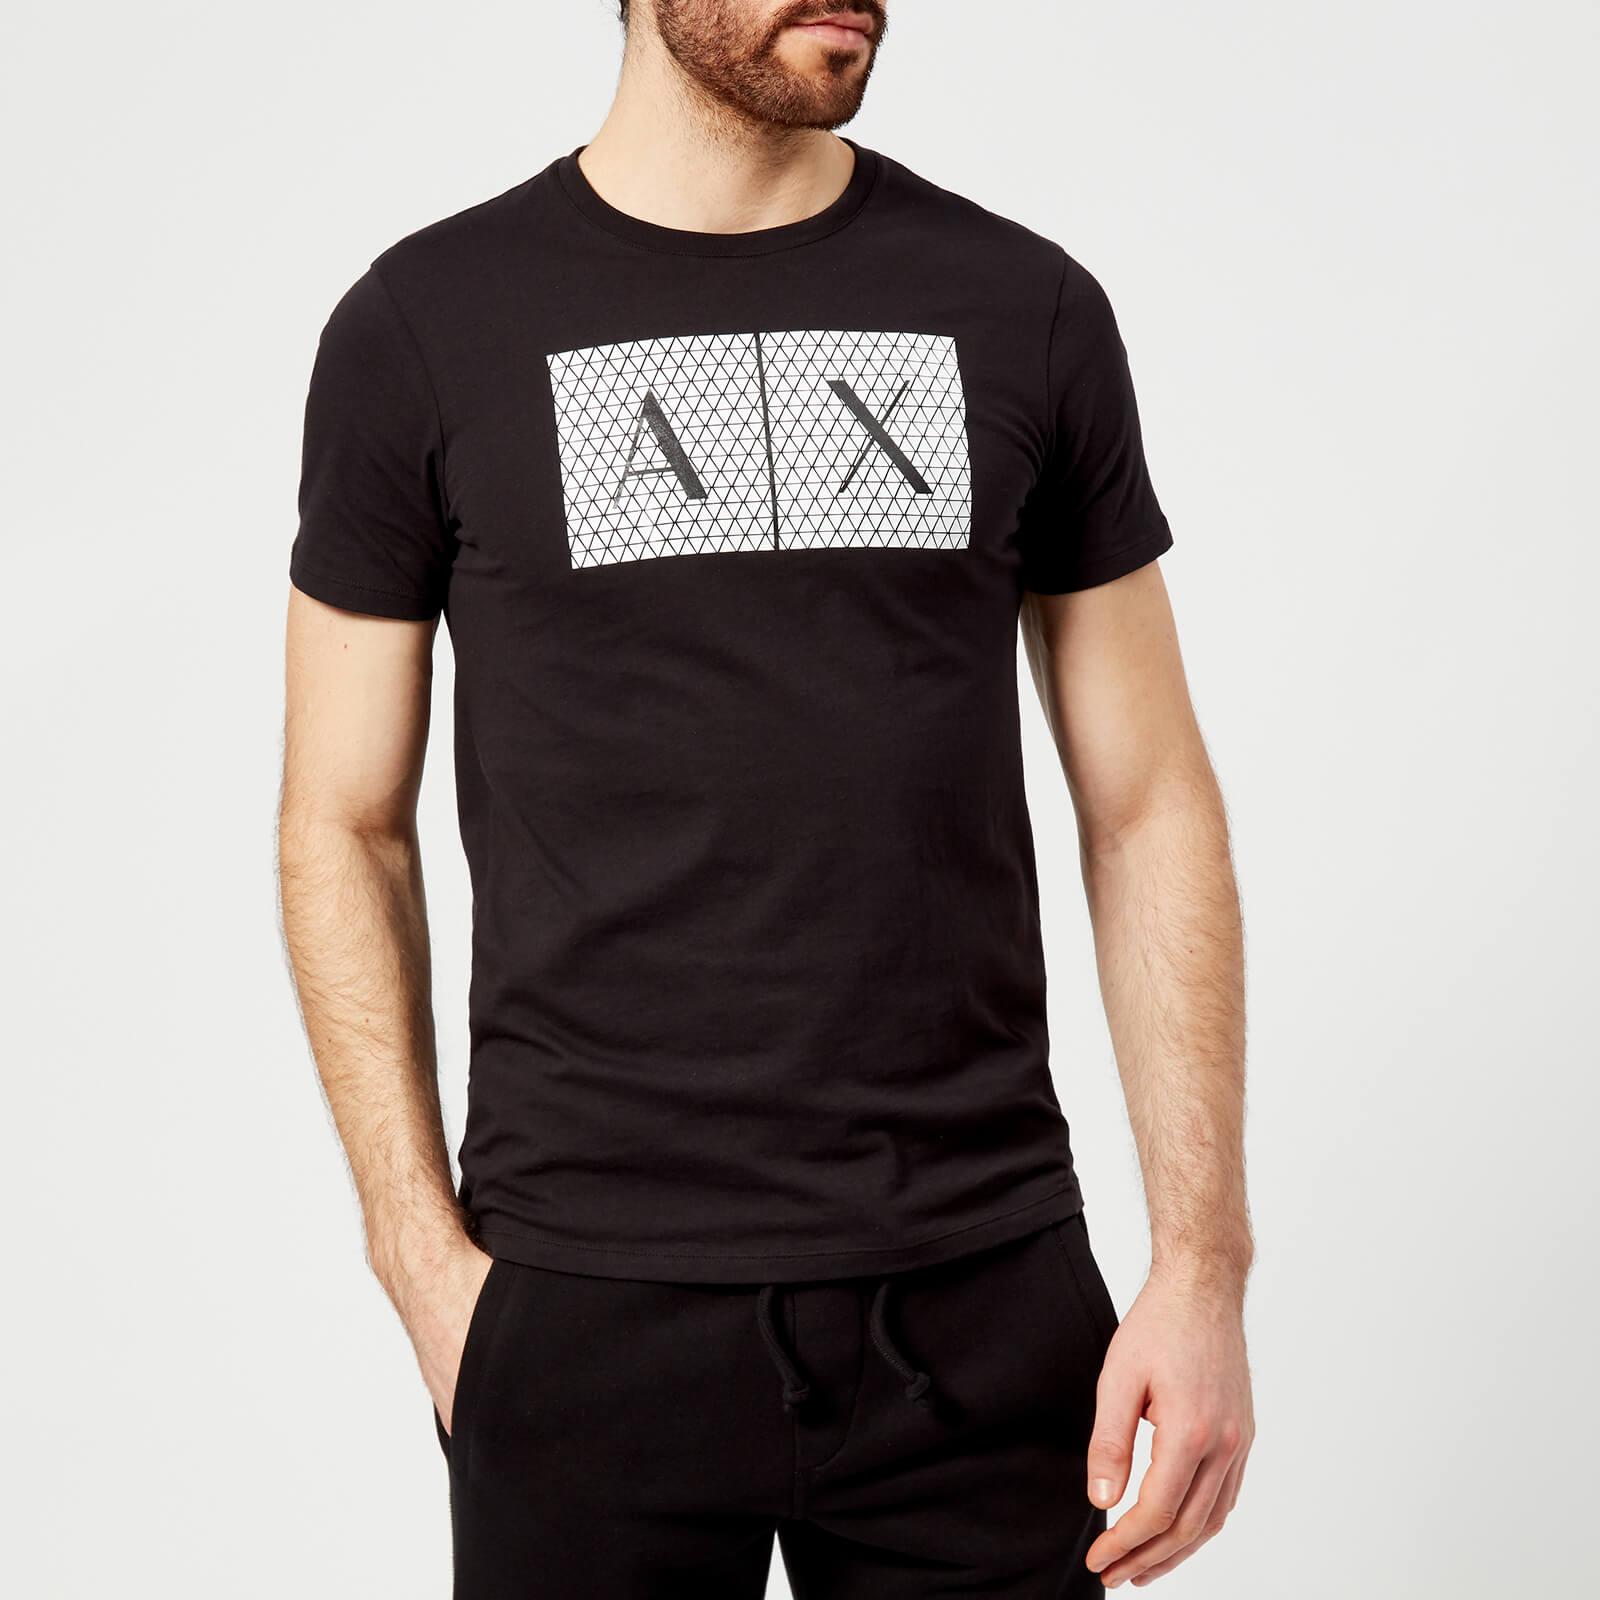 ax t shirts